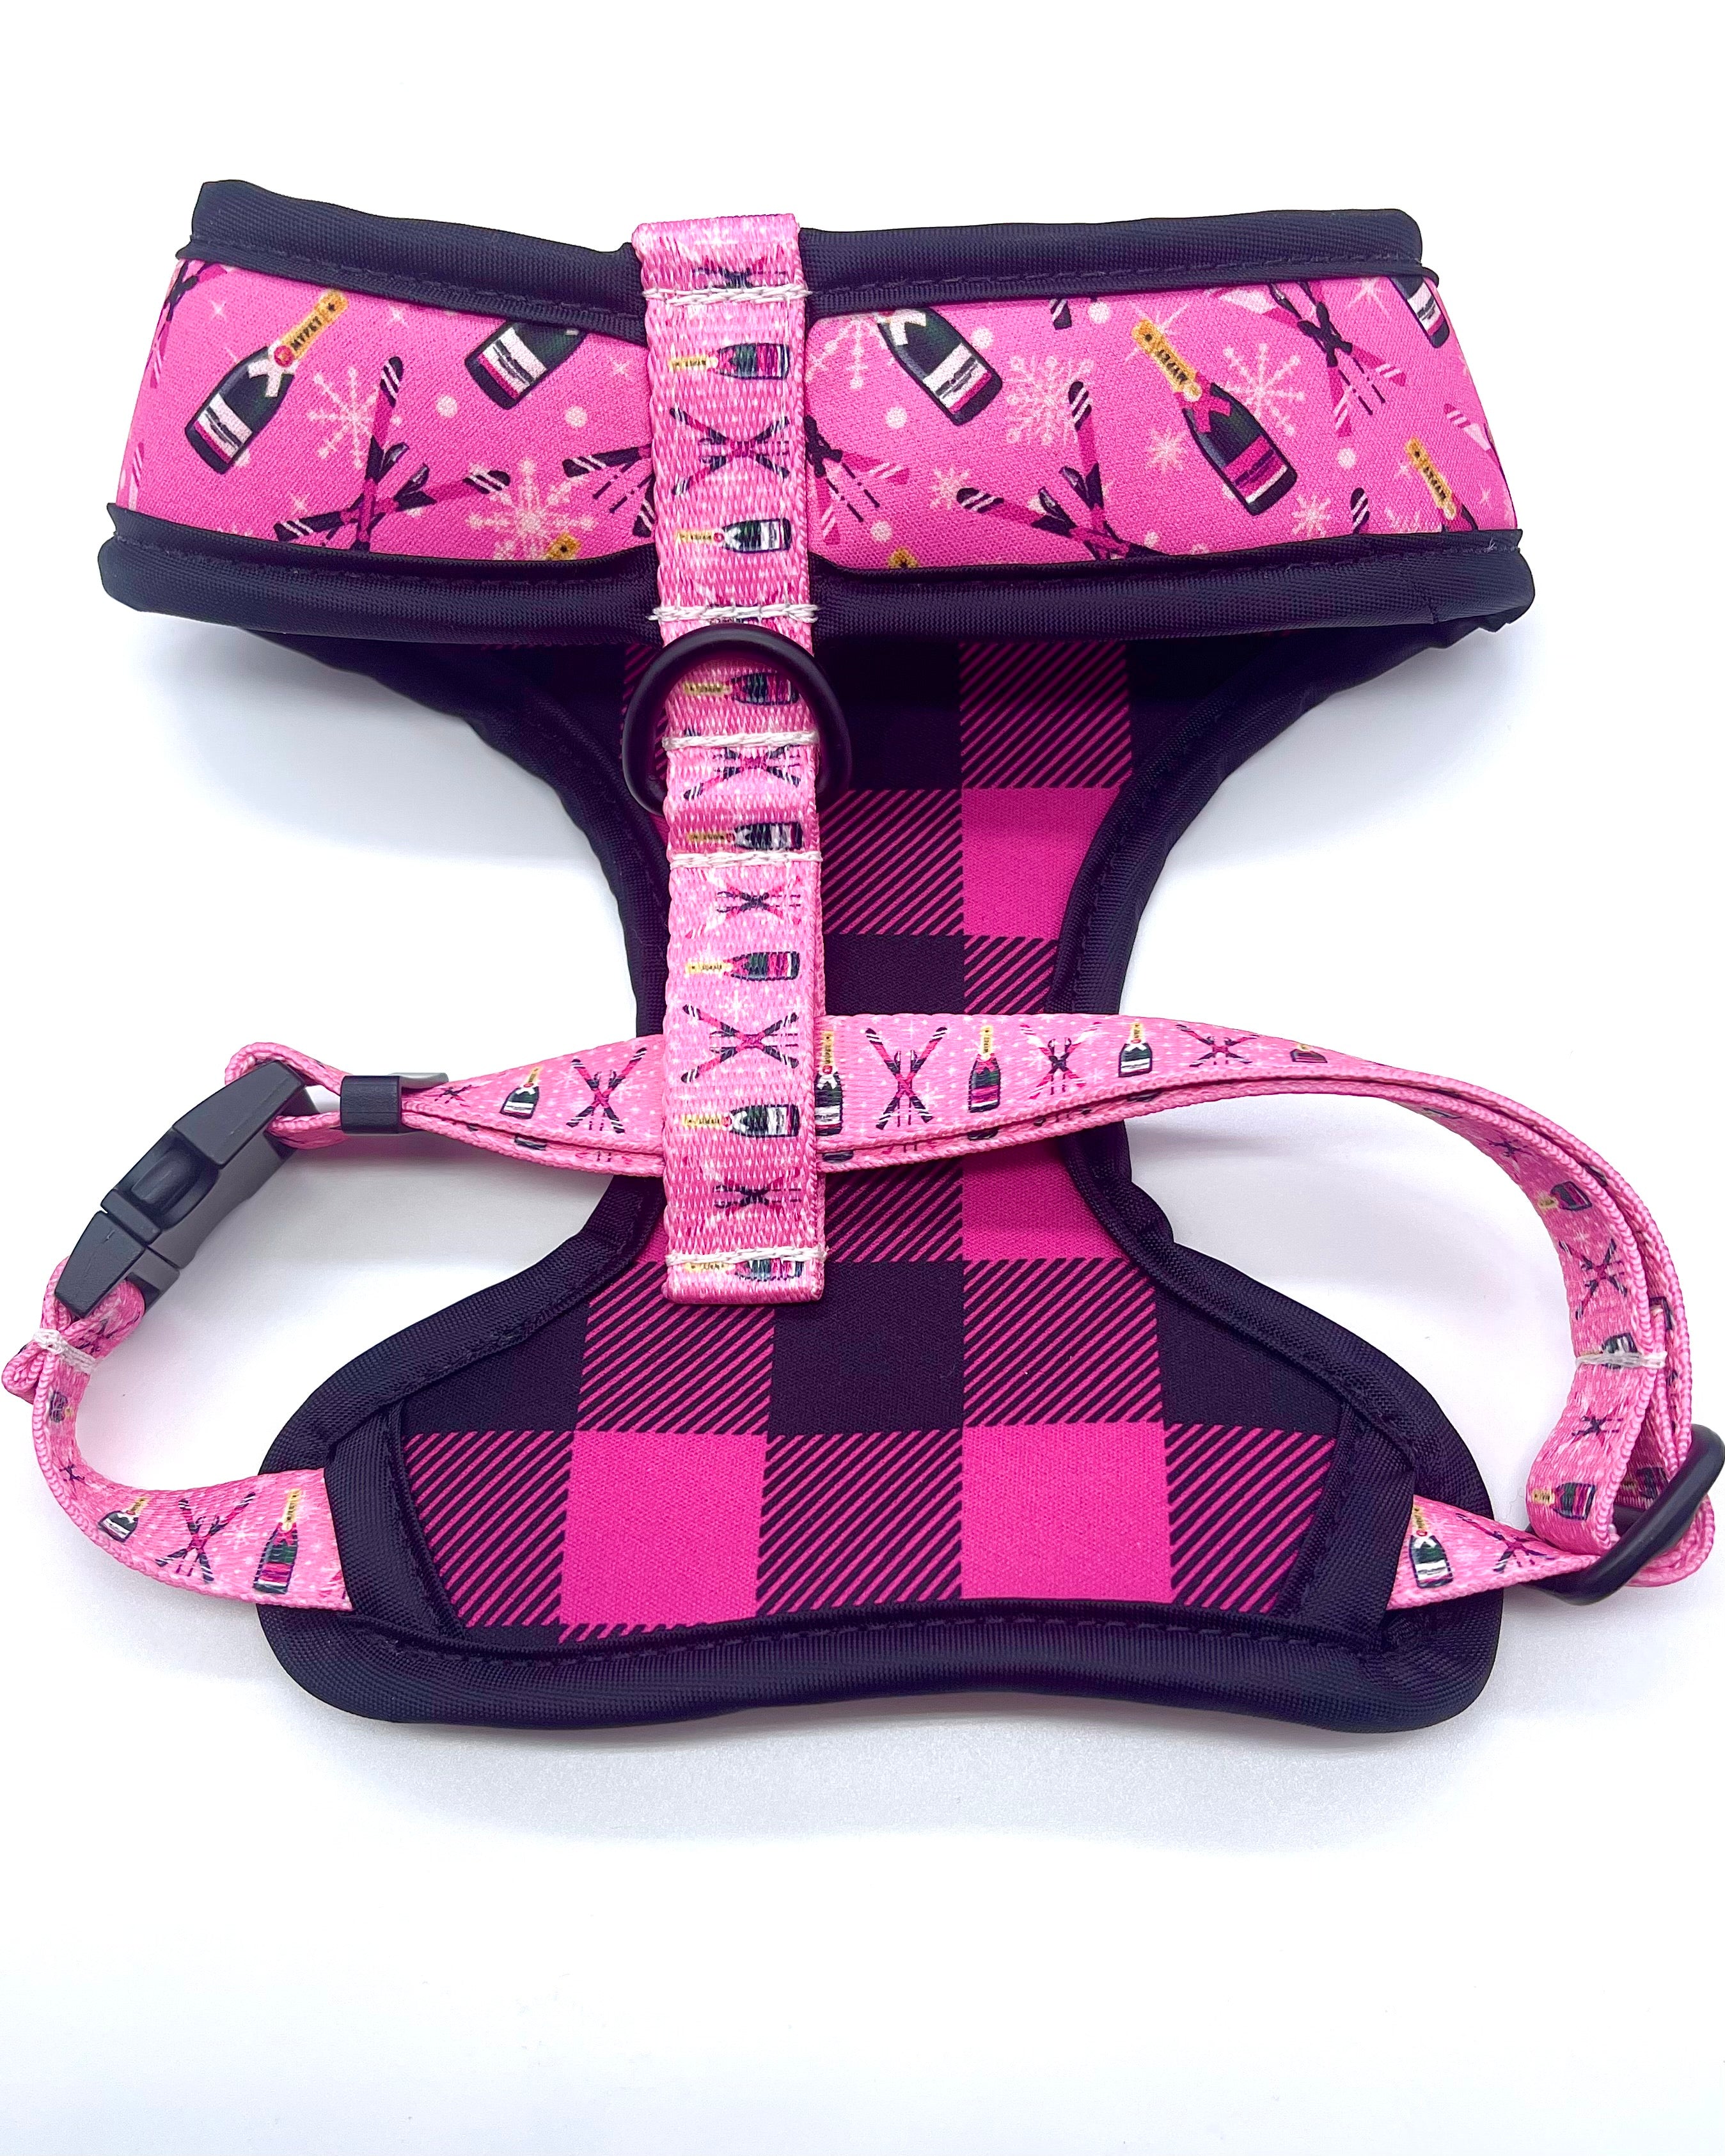 Ski Champagne - Pink Plaid Harness